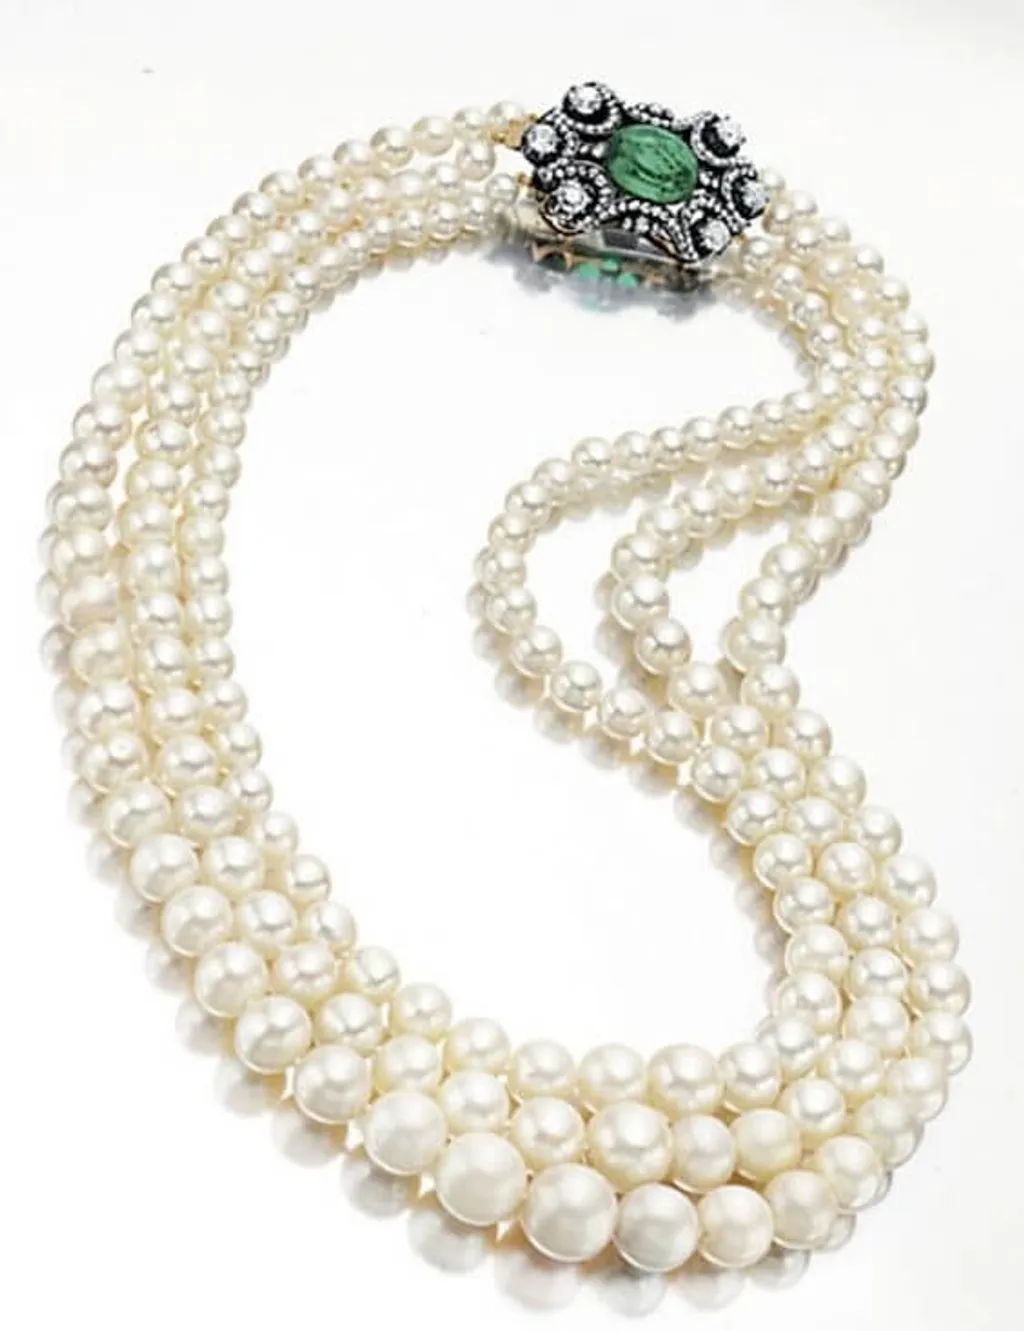 gyöngy fotók
10 Natural Three Strands Pearls Necklace – $1.4 million 